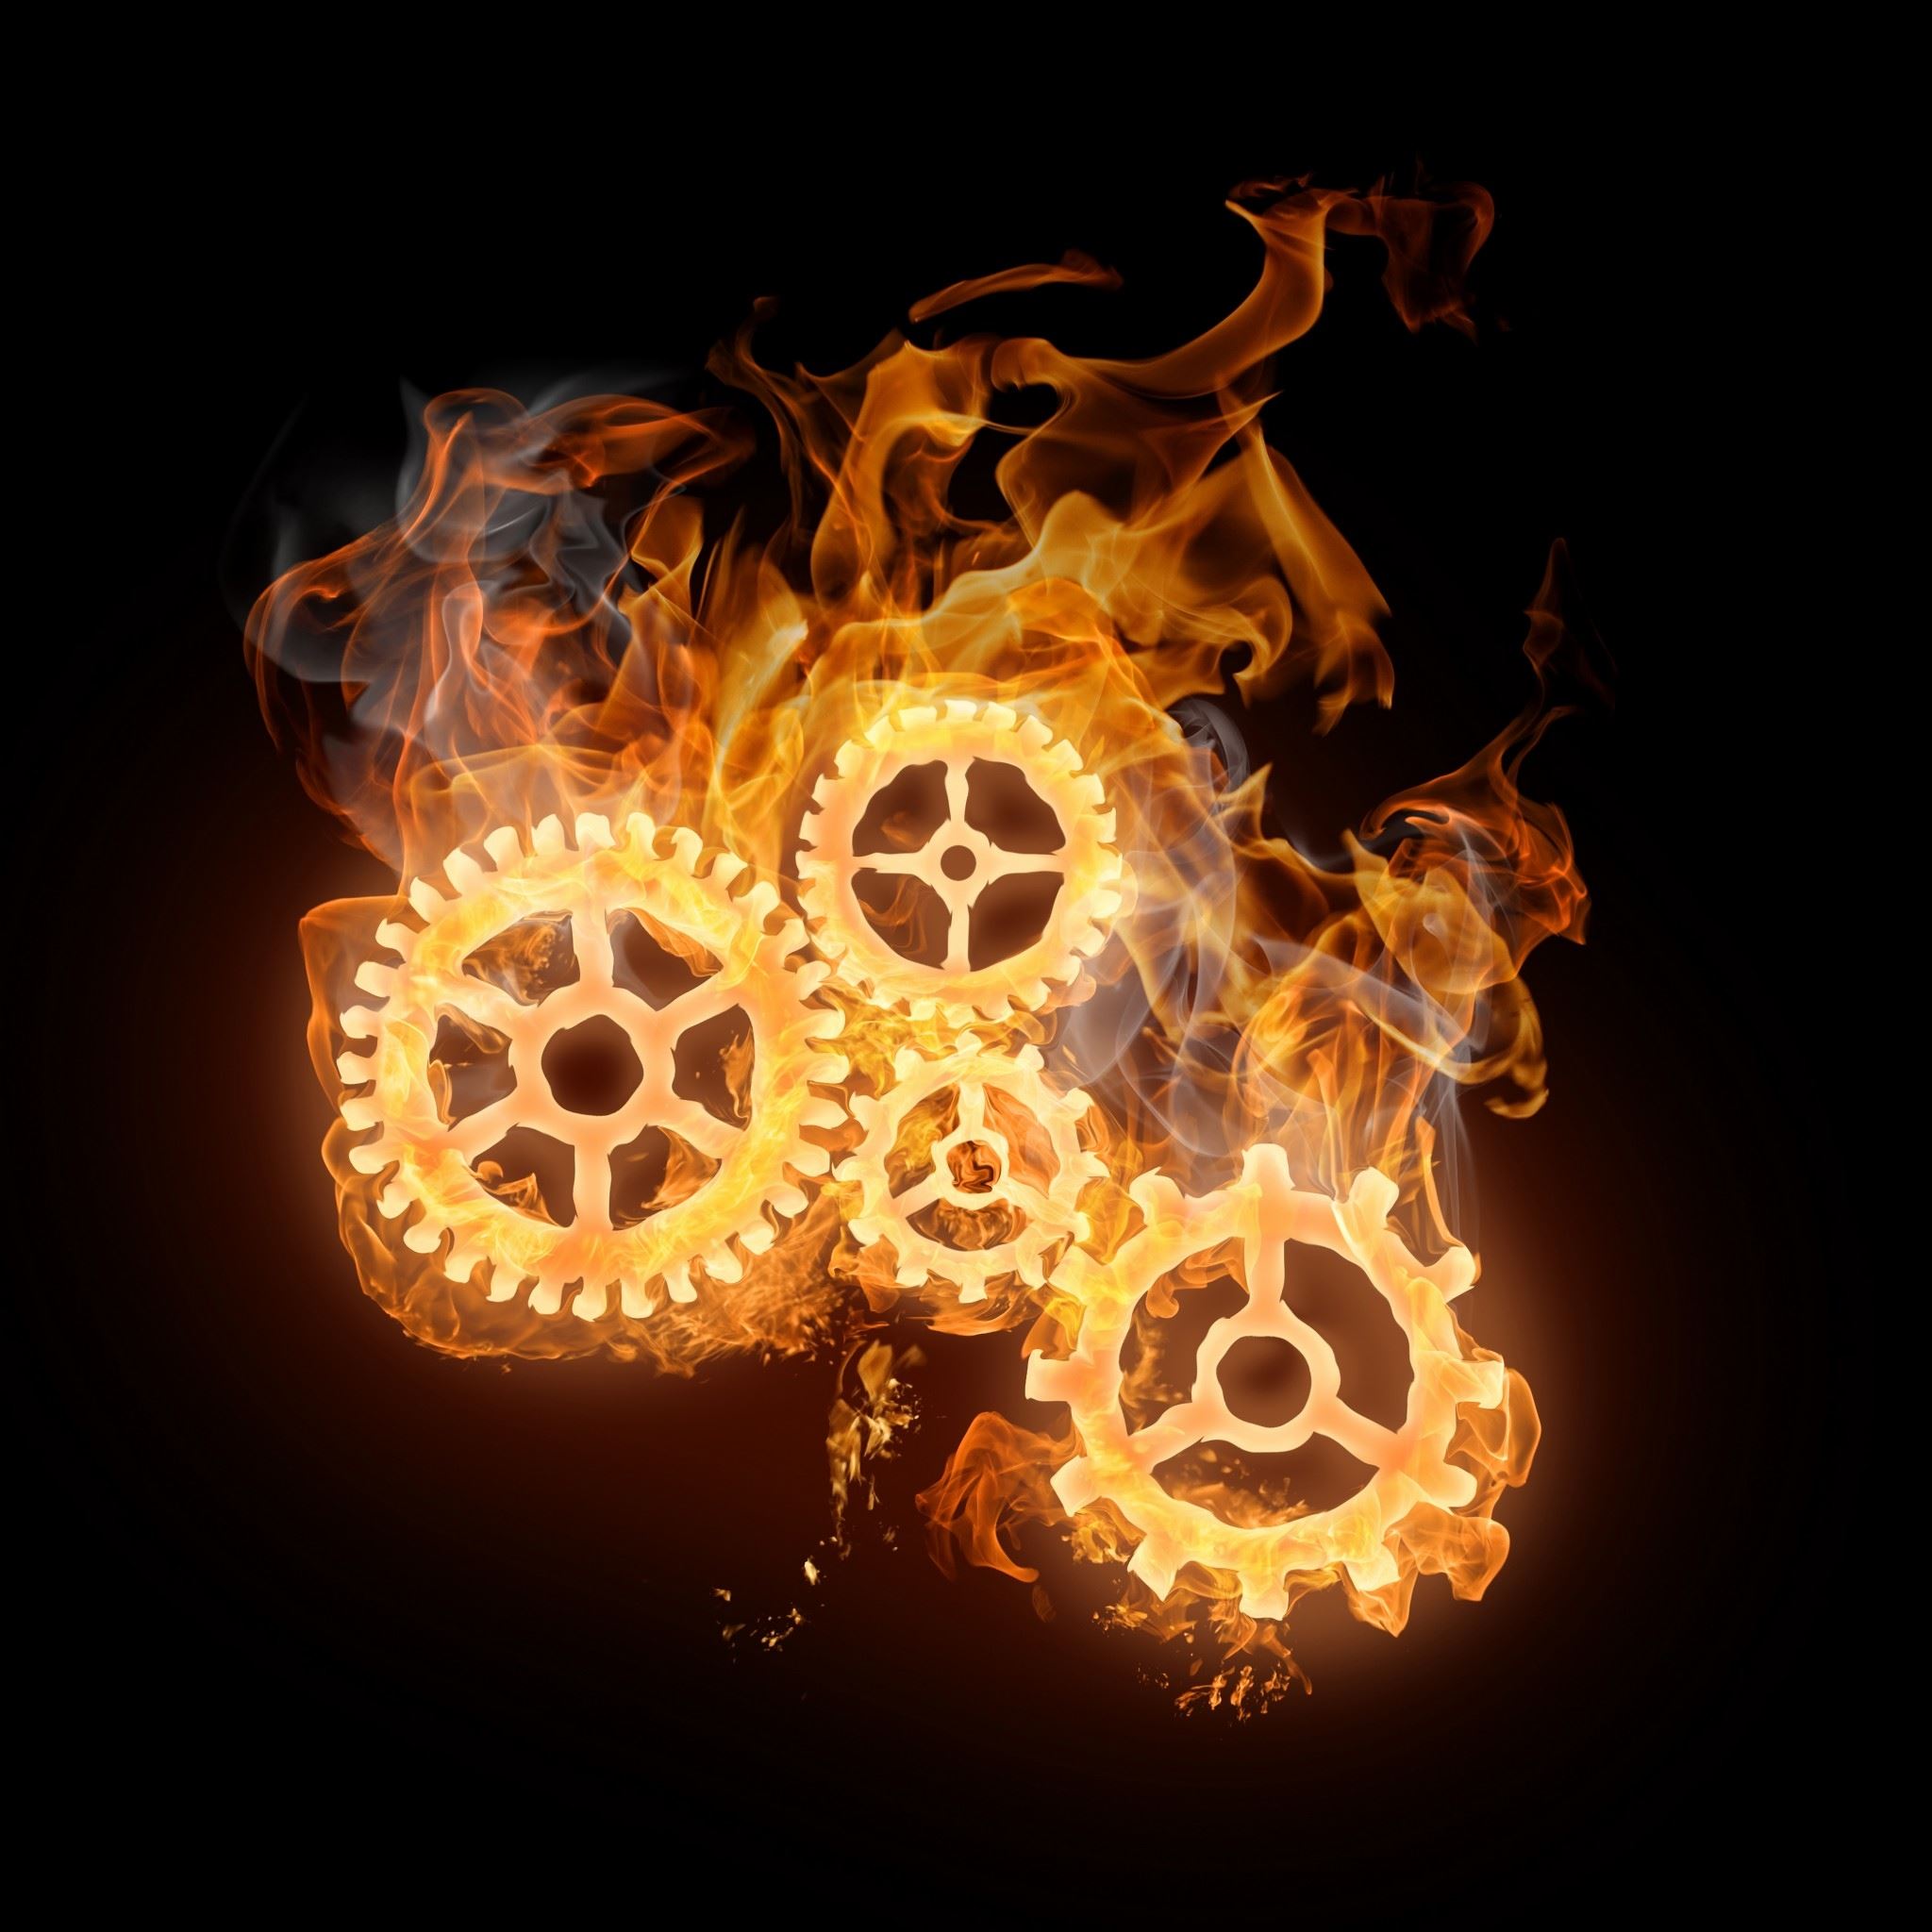 Wheels On Fire iPad Air wallpaper 